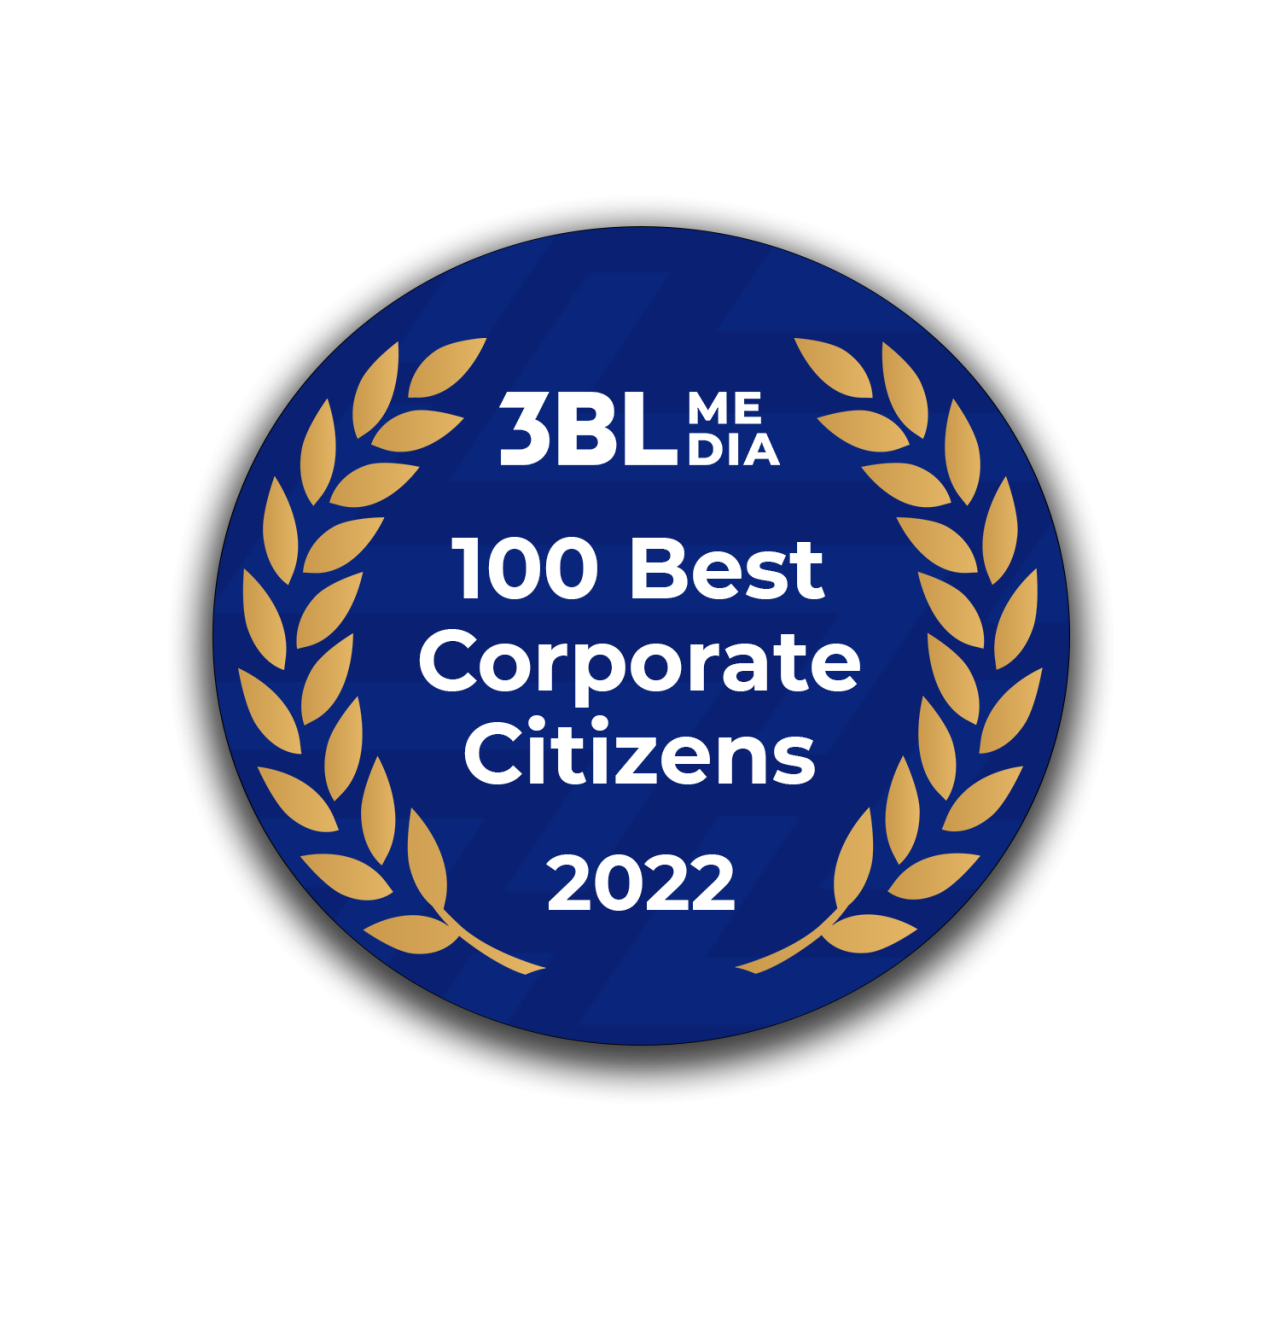 3BL Media 100 Best Corporate Citizens 2022 logo